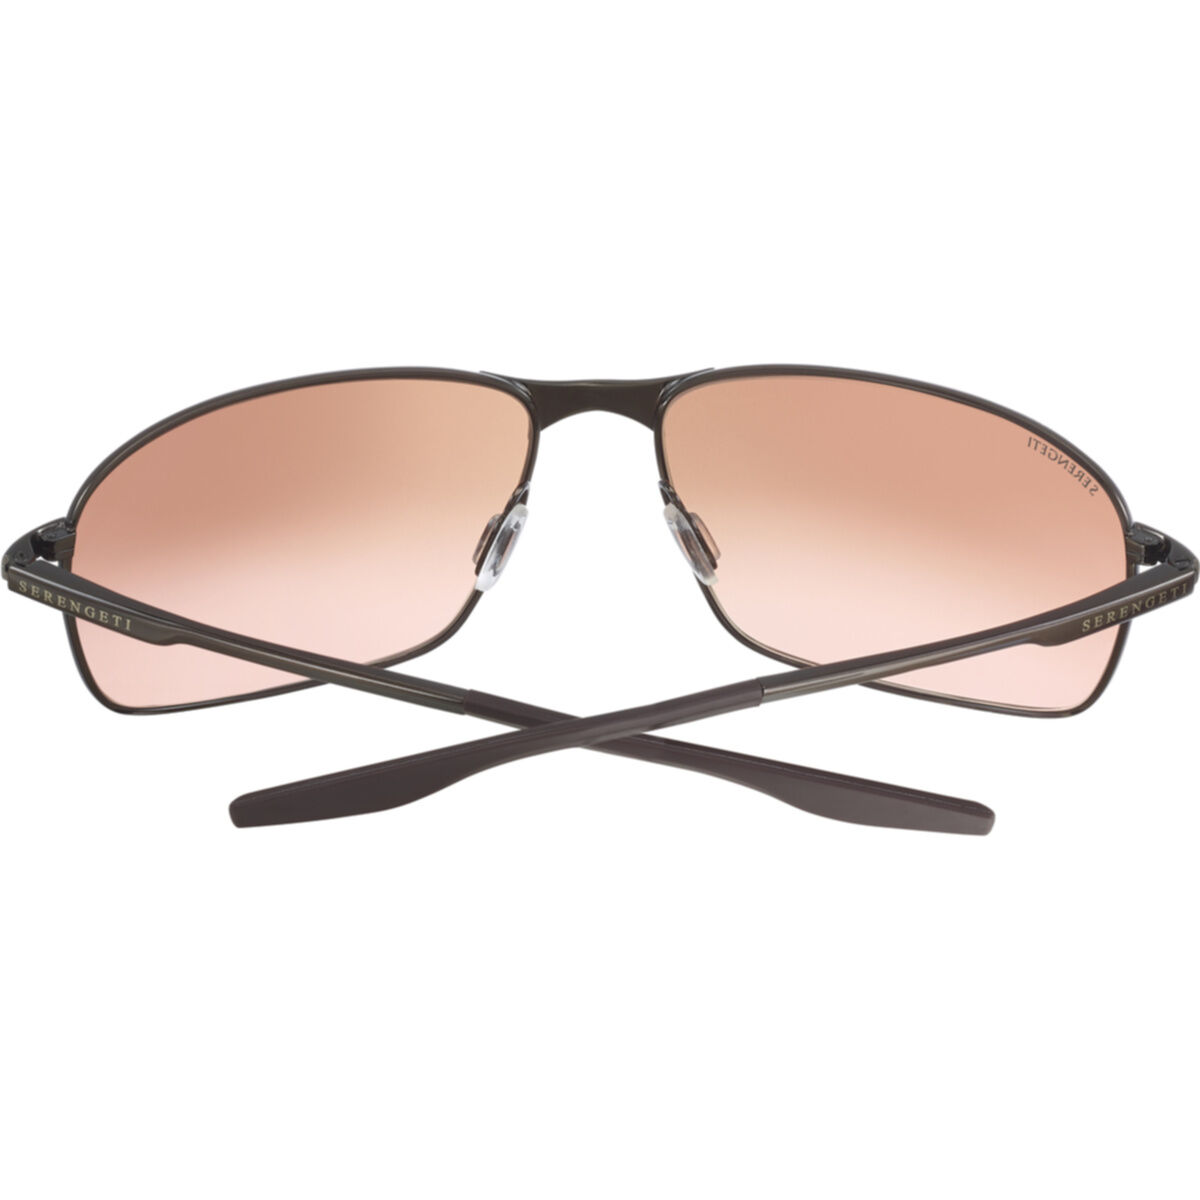 Serengeti Varese Sunglasses Brushed Brown Unisex-Adult Large